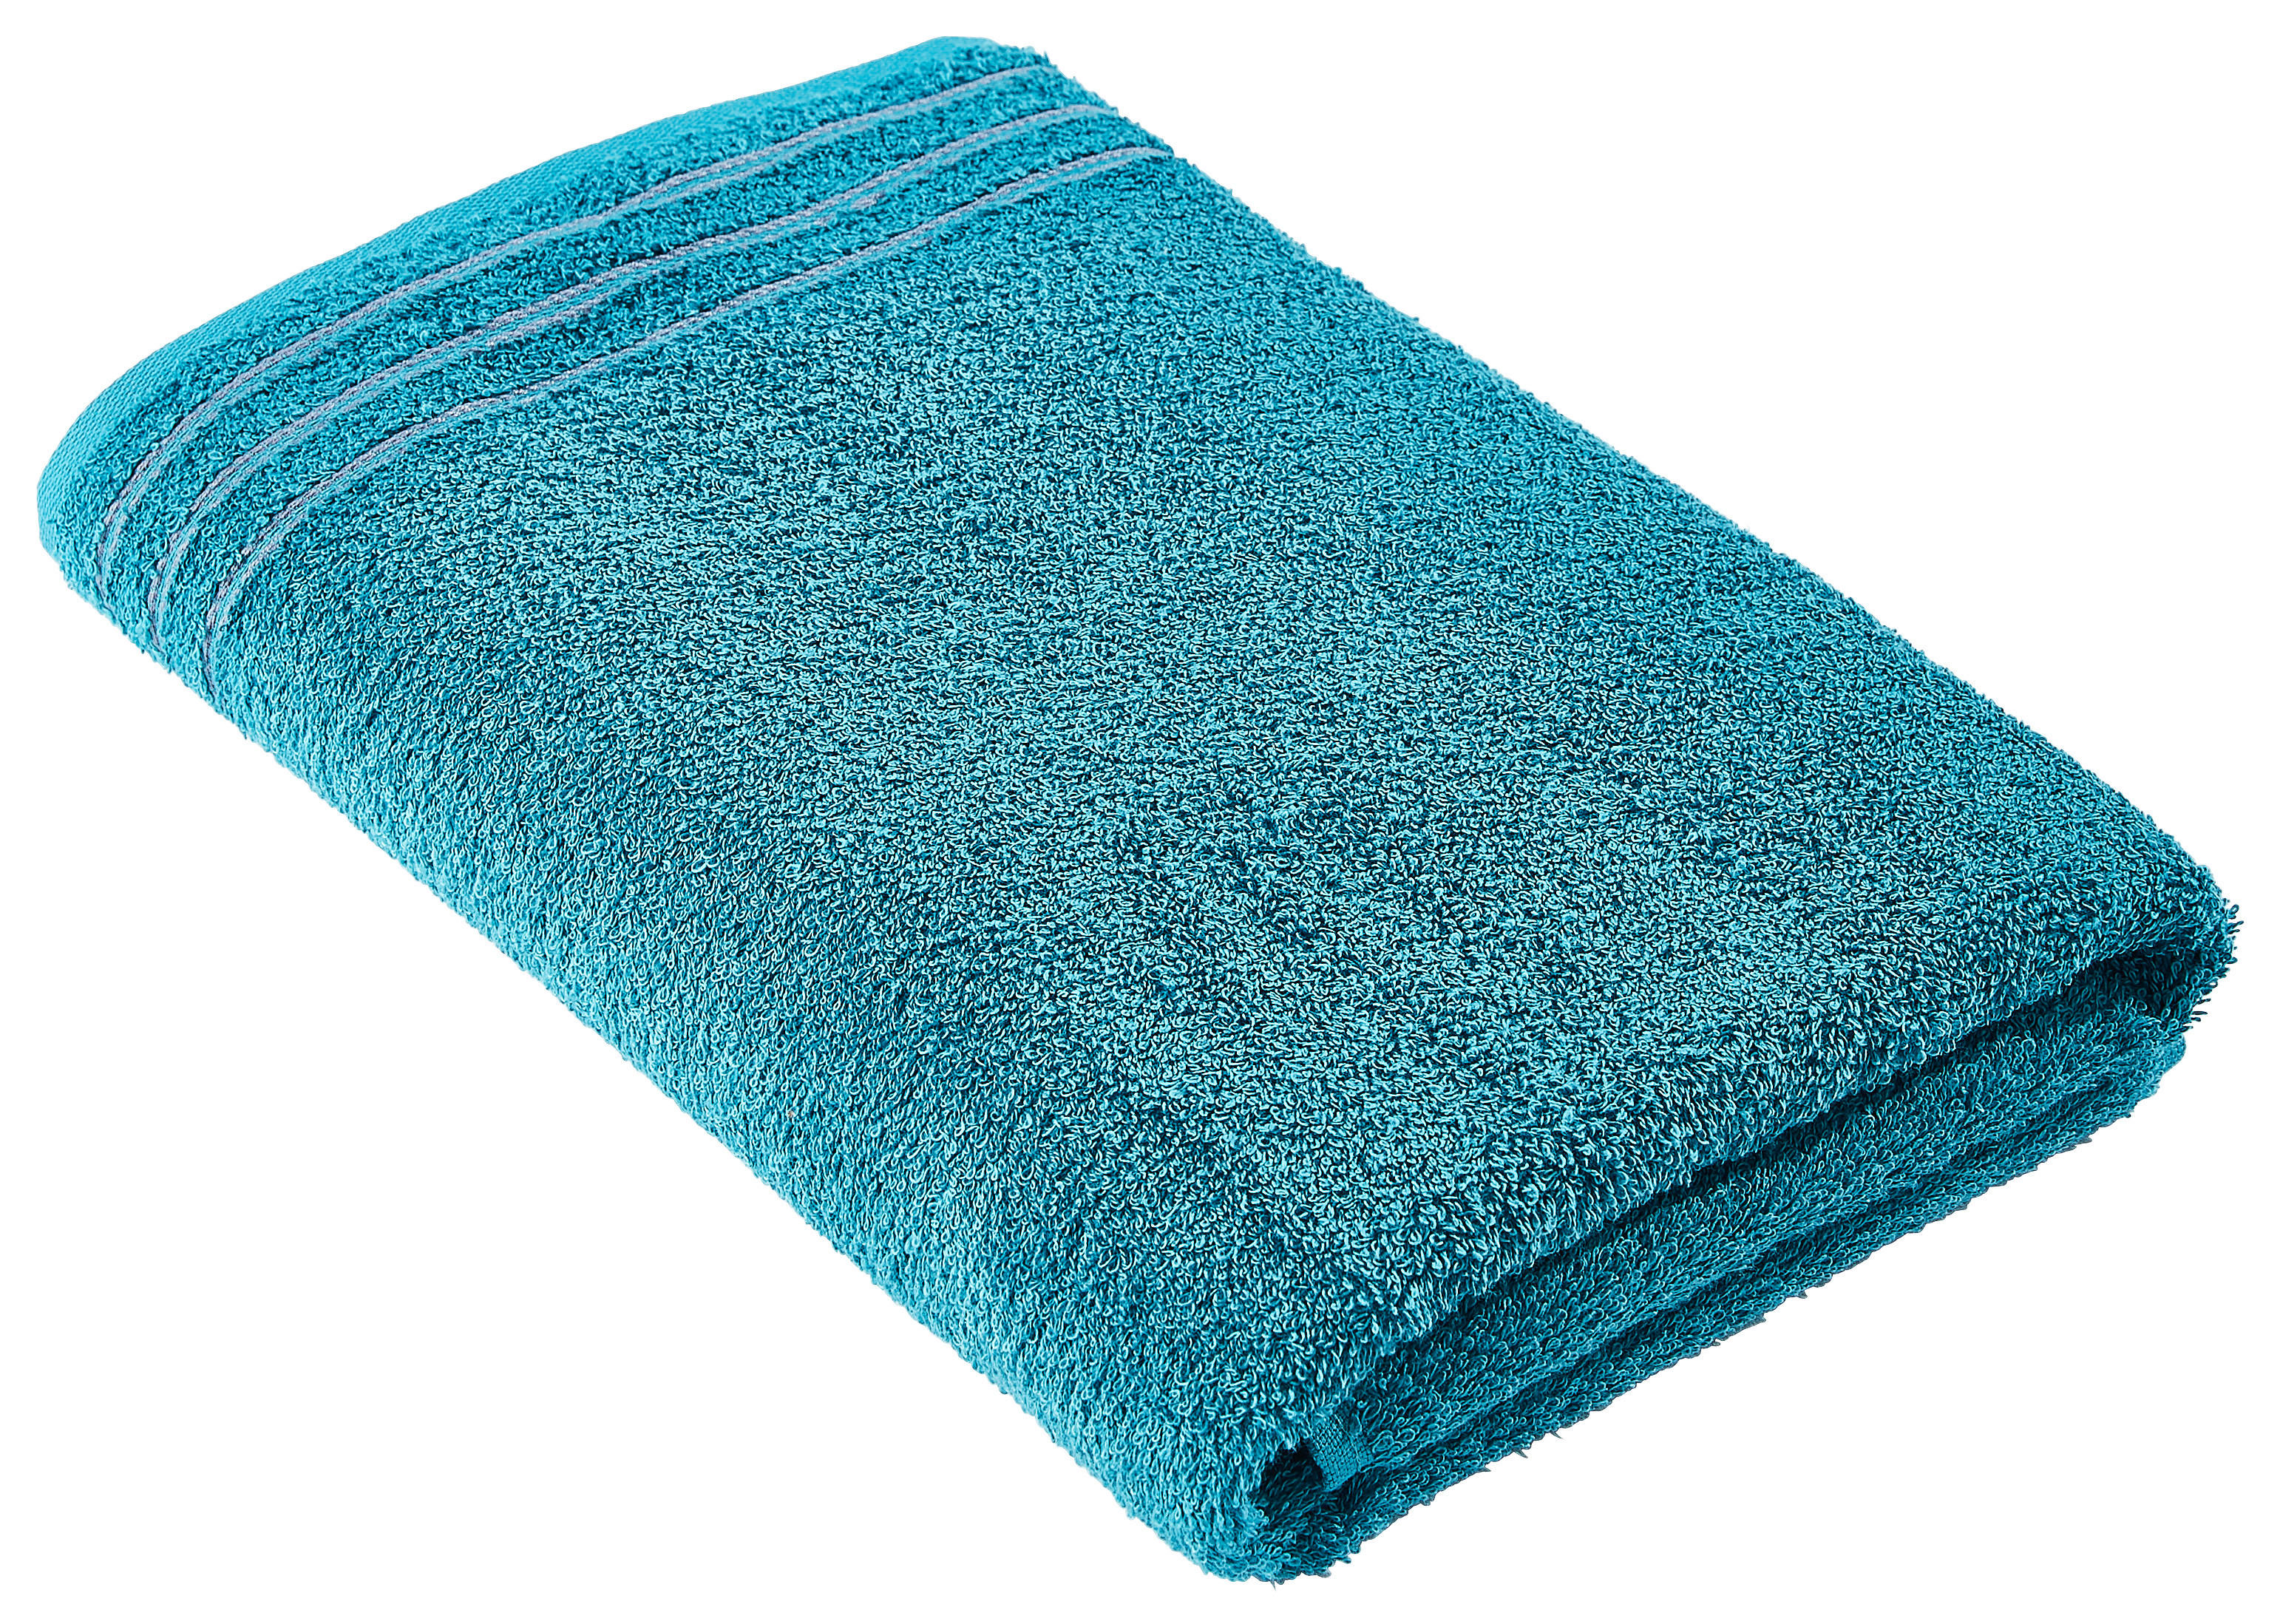 SAUNATUCH Grossetto  - Blau, Basics, Textil (80/200cm) - Vossen